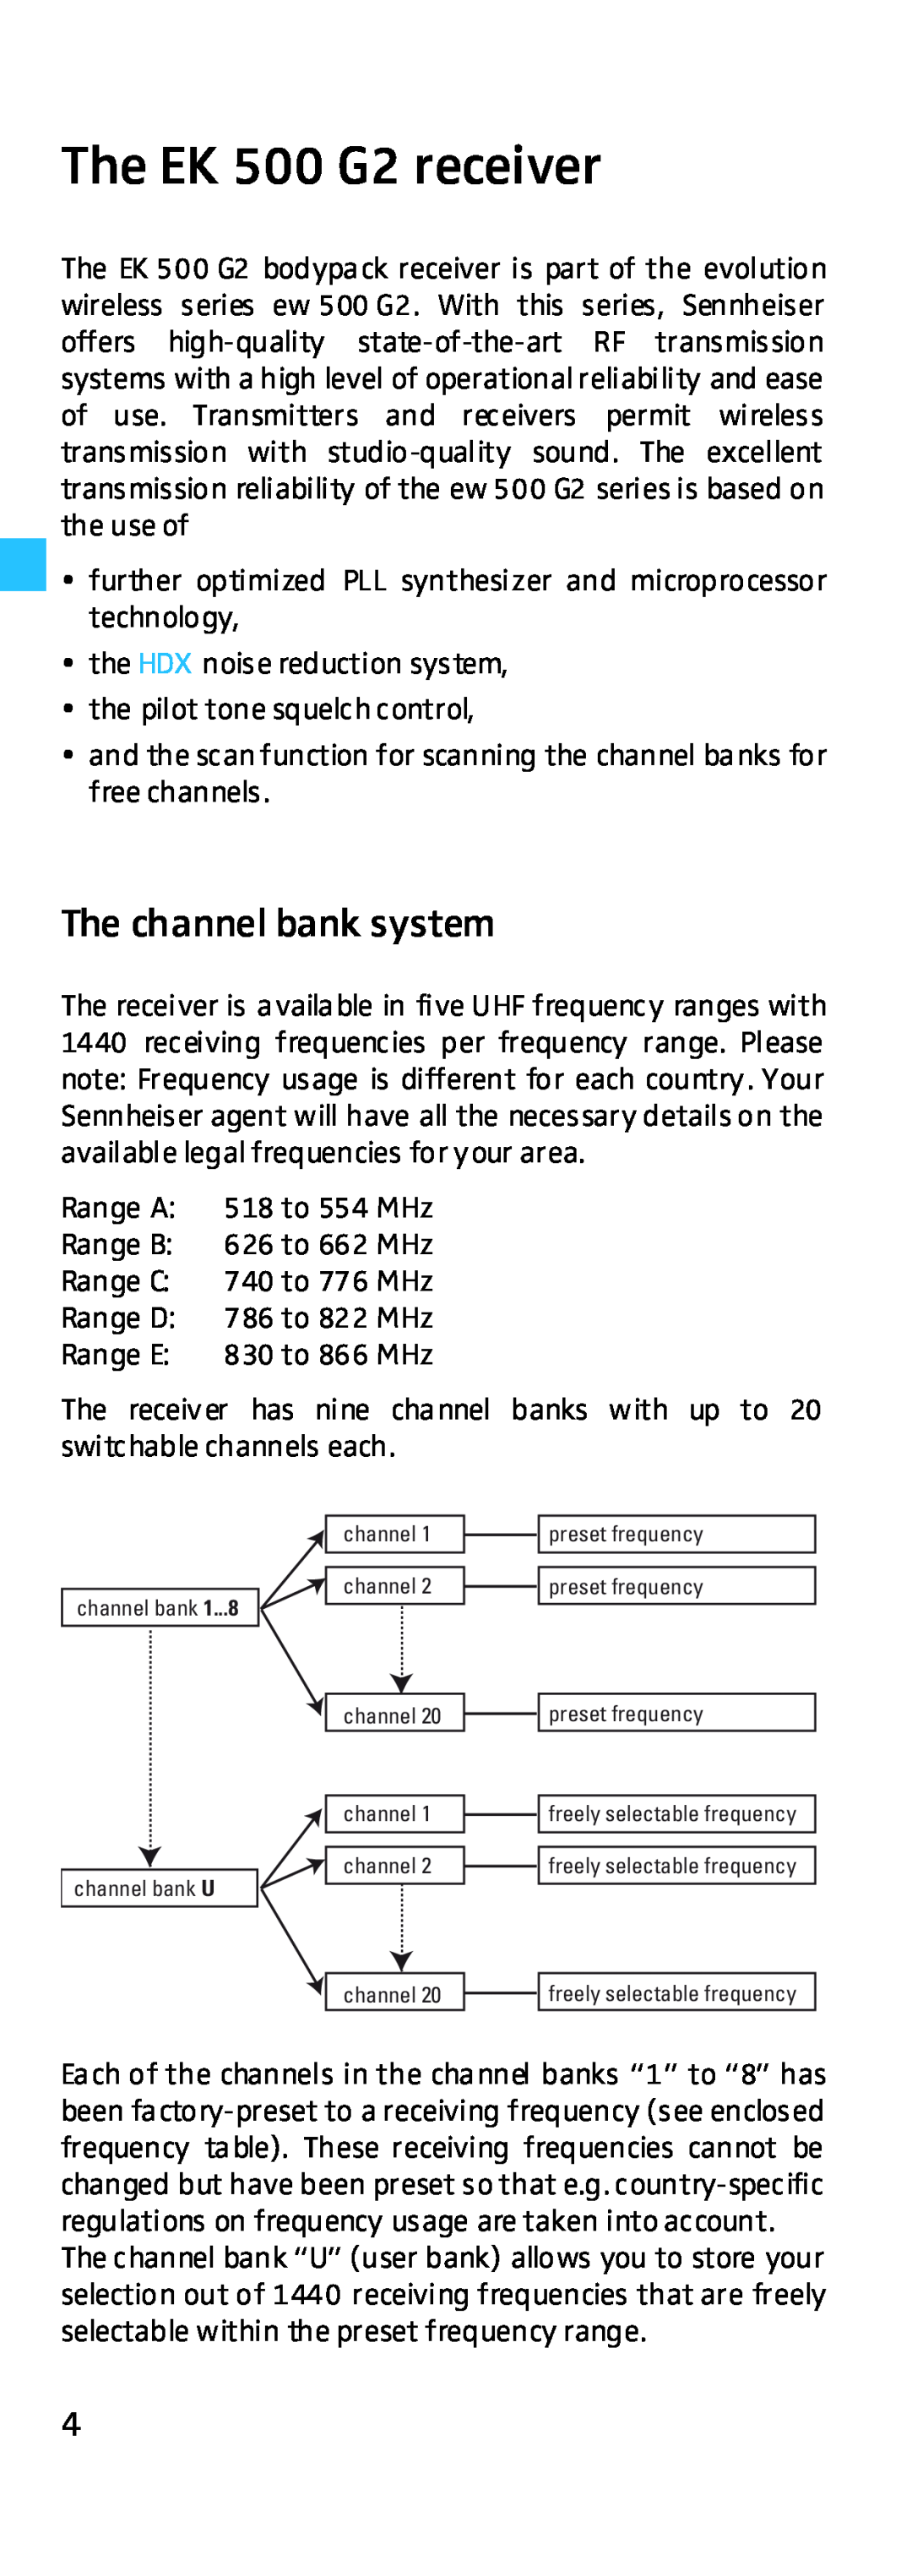 Sennheiser manual The EK 500 G2 receiver, The channel bank system 